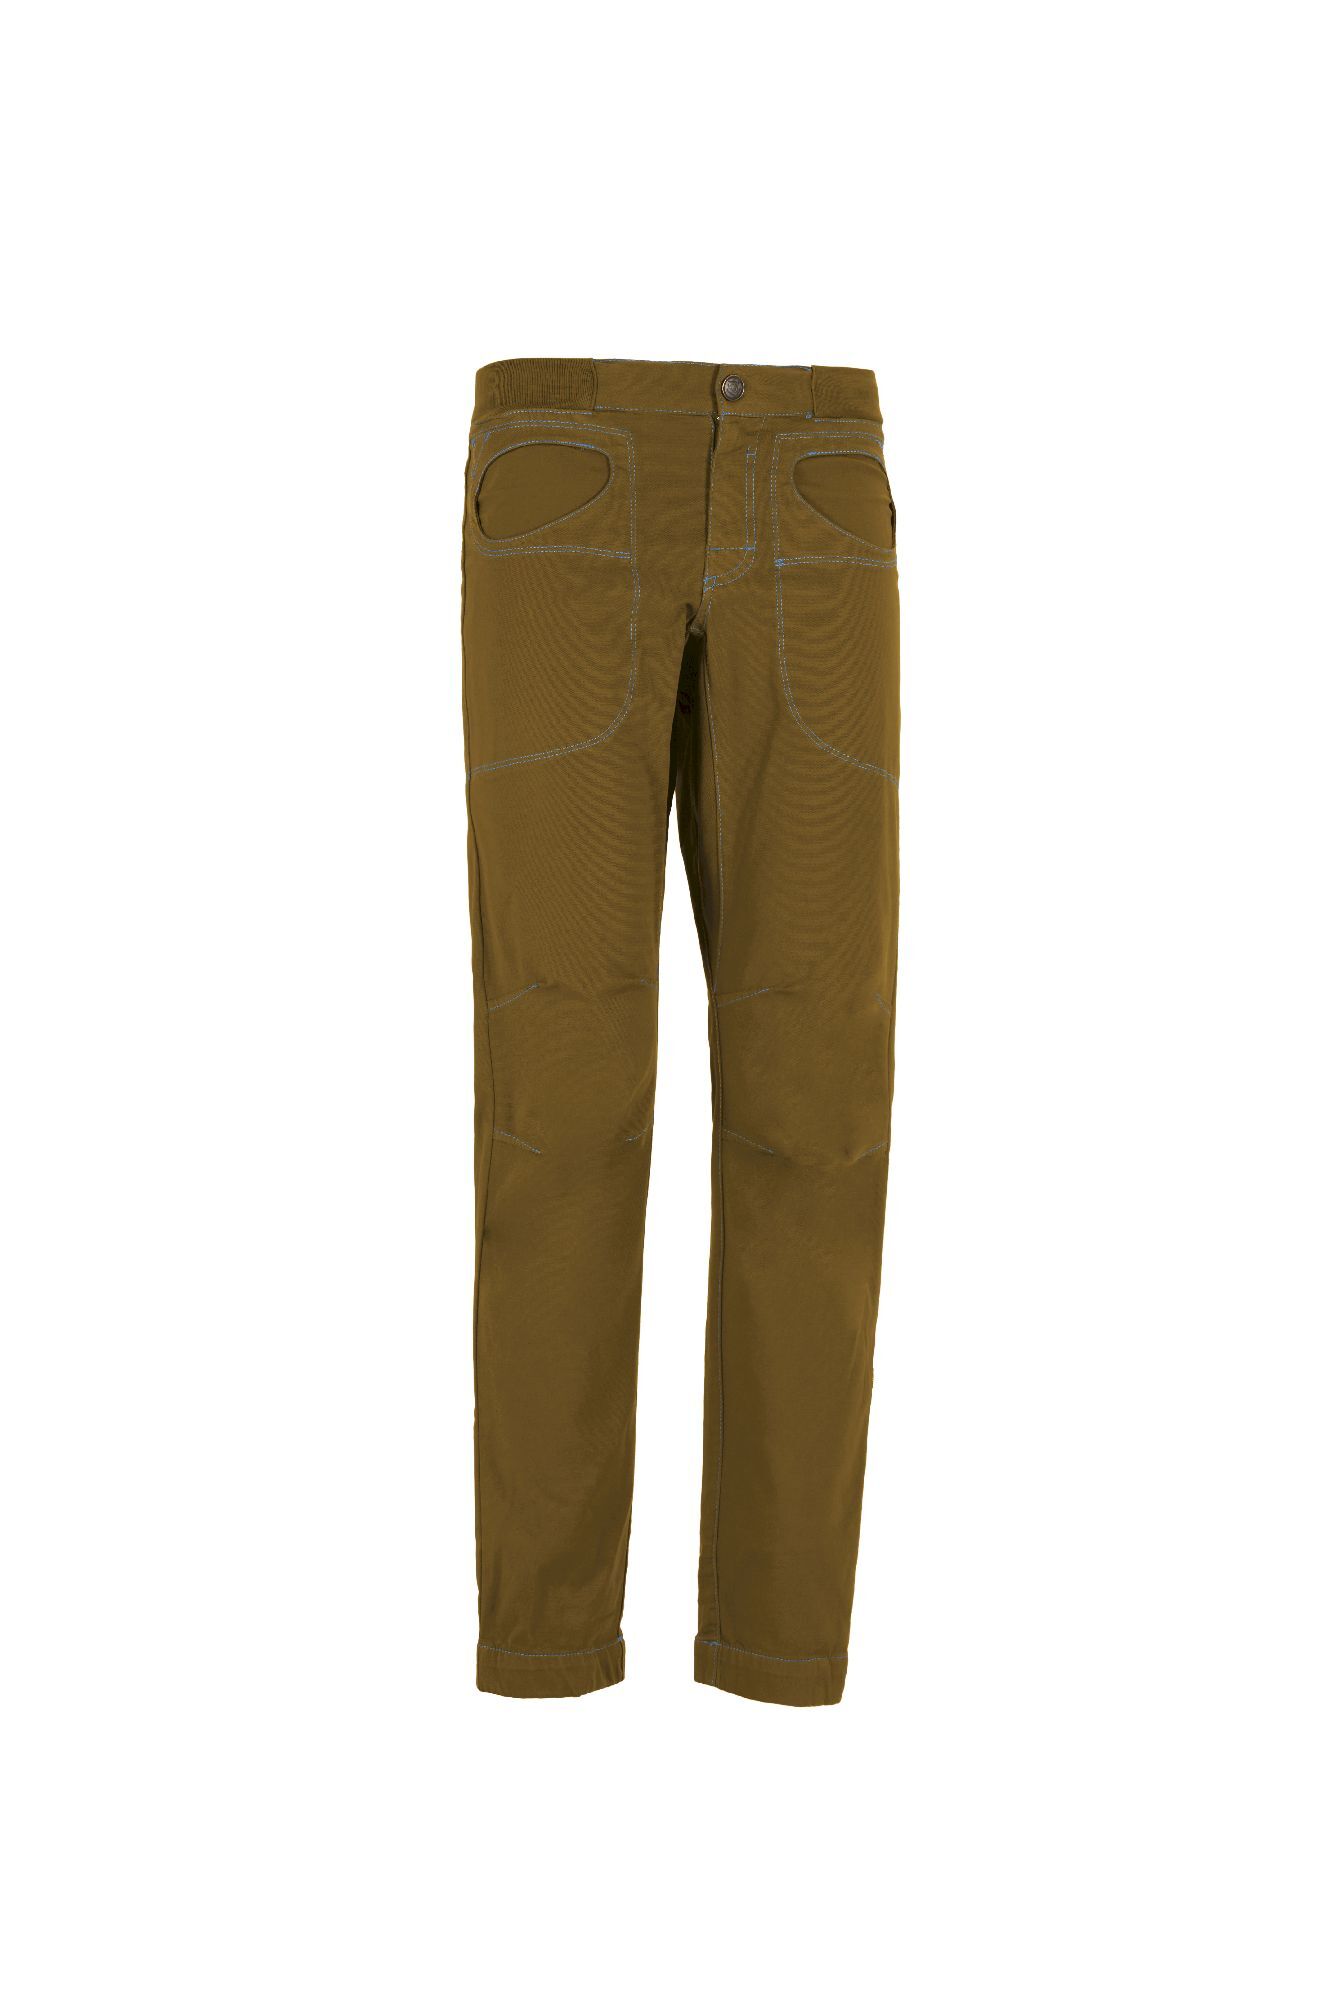 E9 Rondo Artrock 2.4 - Climbing trousers - Men's | Hardloop